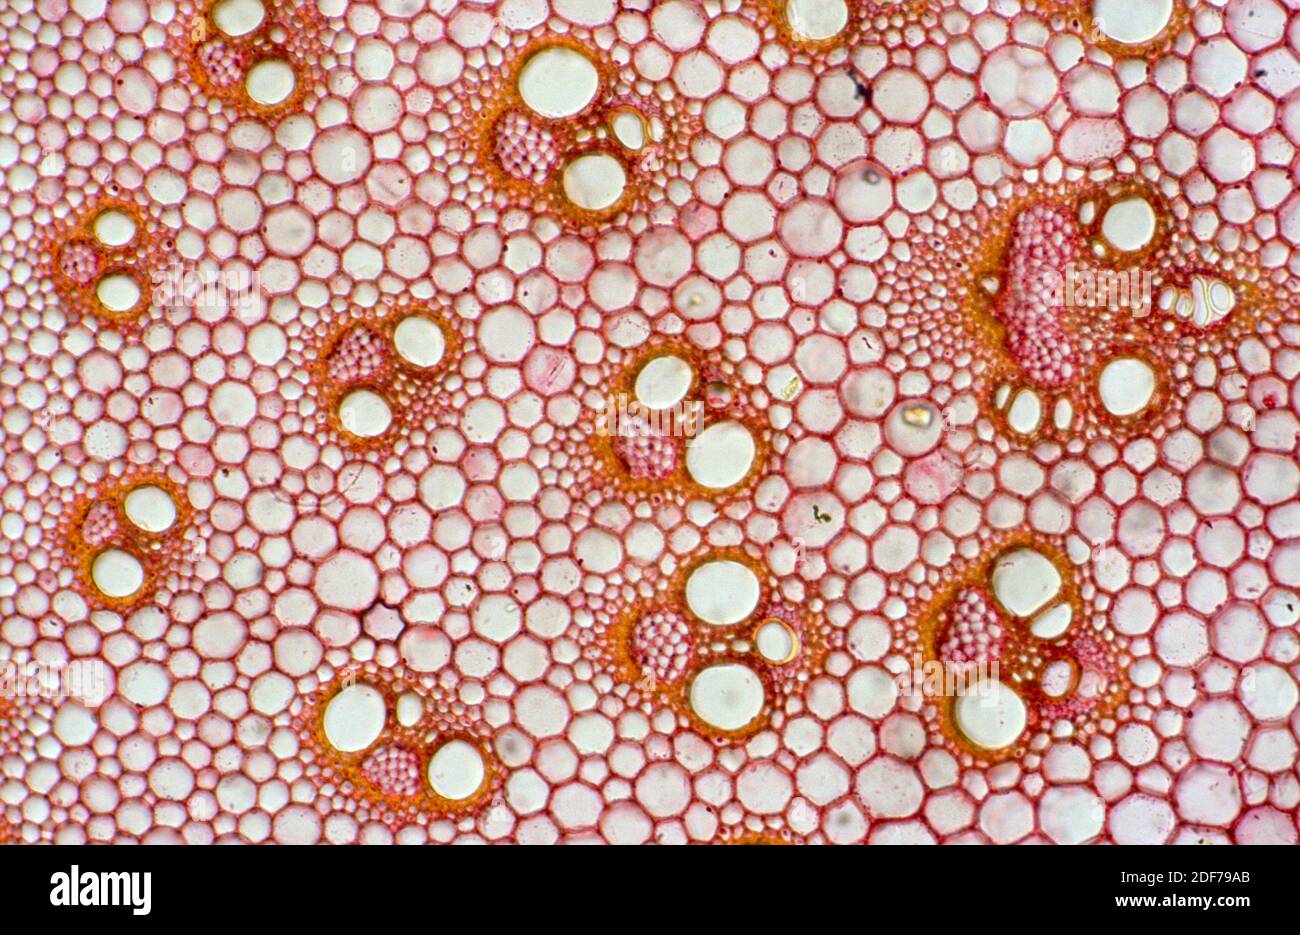 Monocot stem cross section showing epidermis, vascular bundles and parenchyma. Photomicrograph. Stock Photo